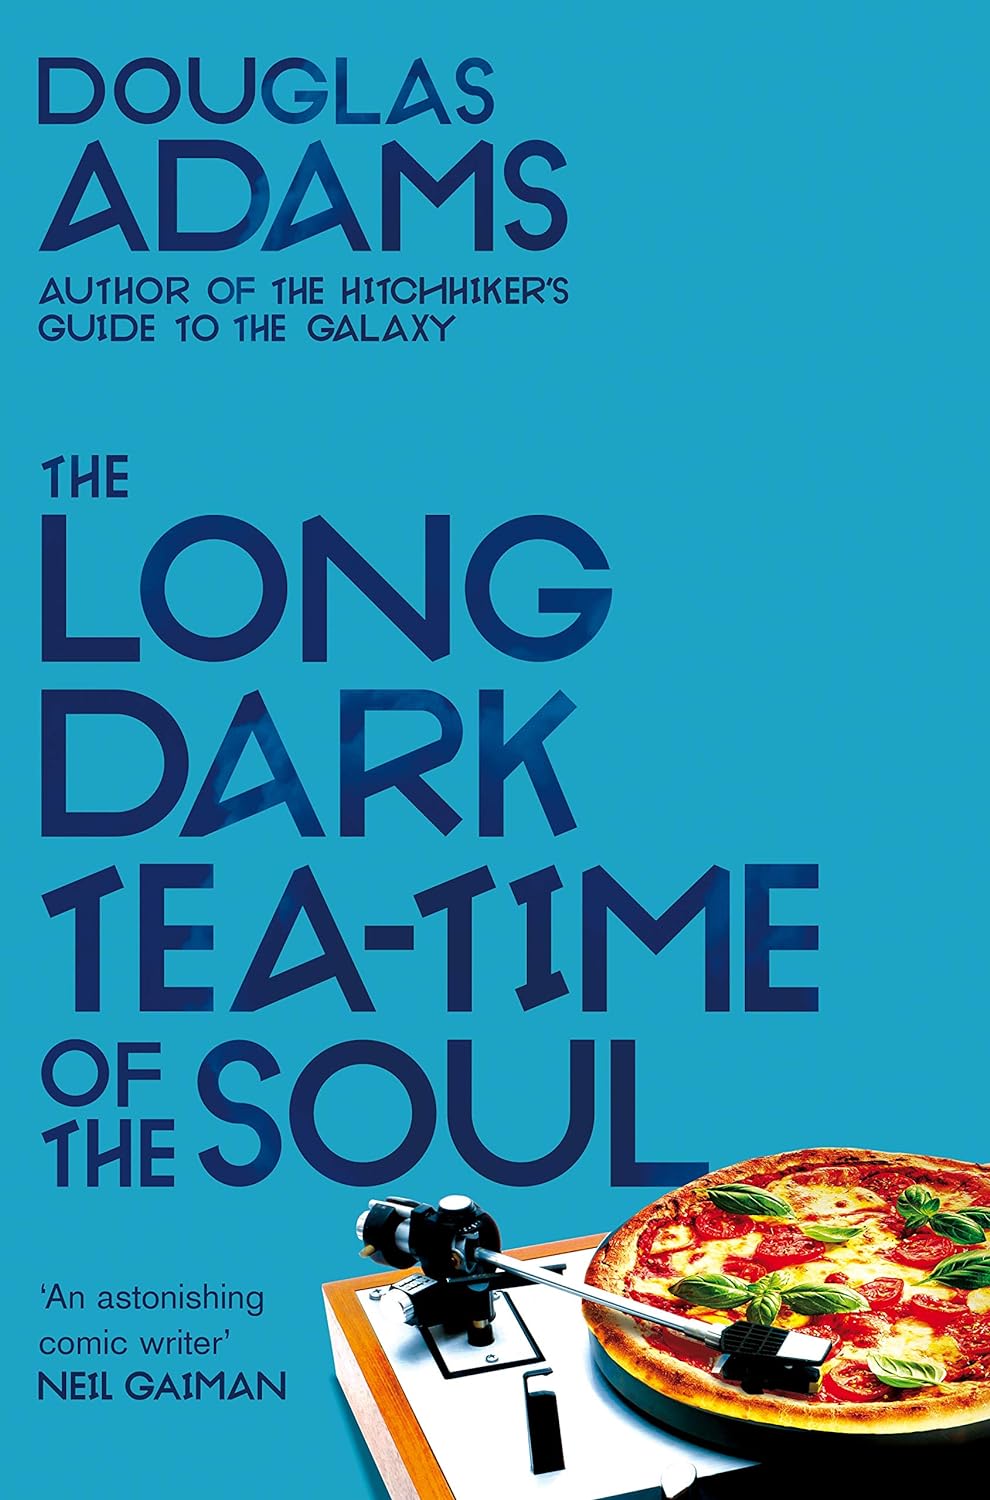 The Long Dark Tea-Time of the Soul | Douglas Adams